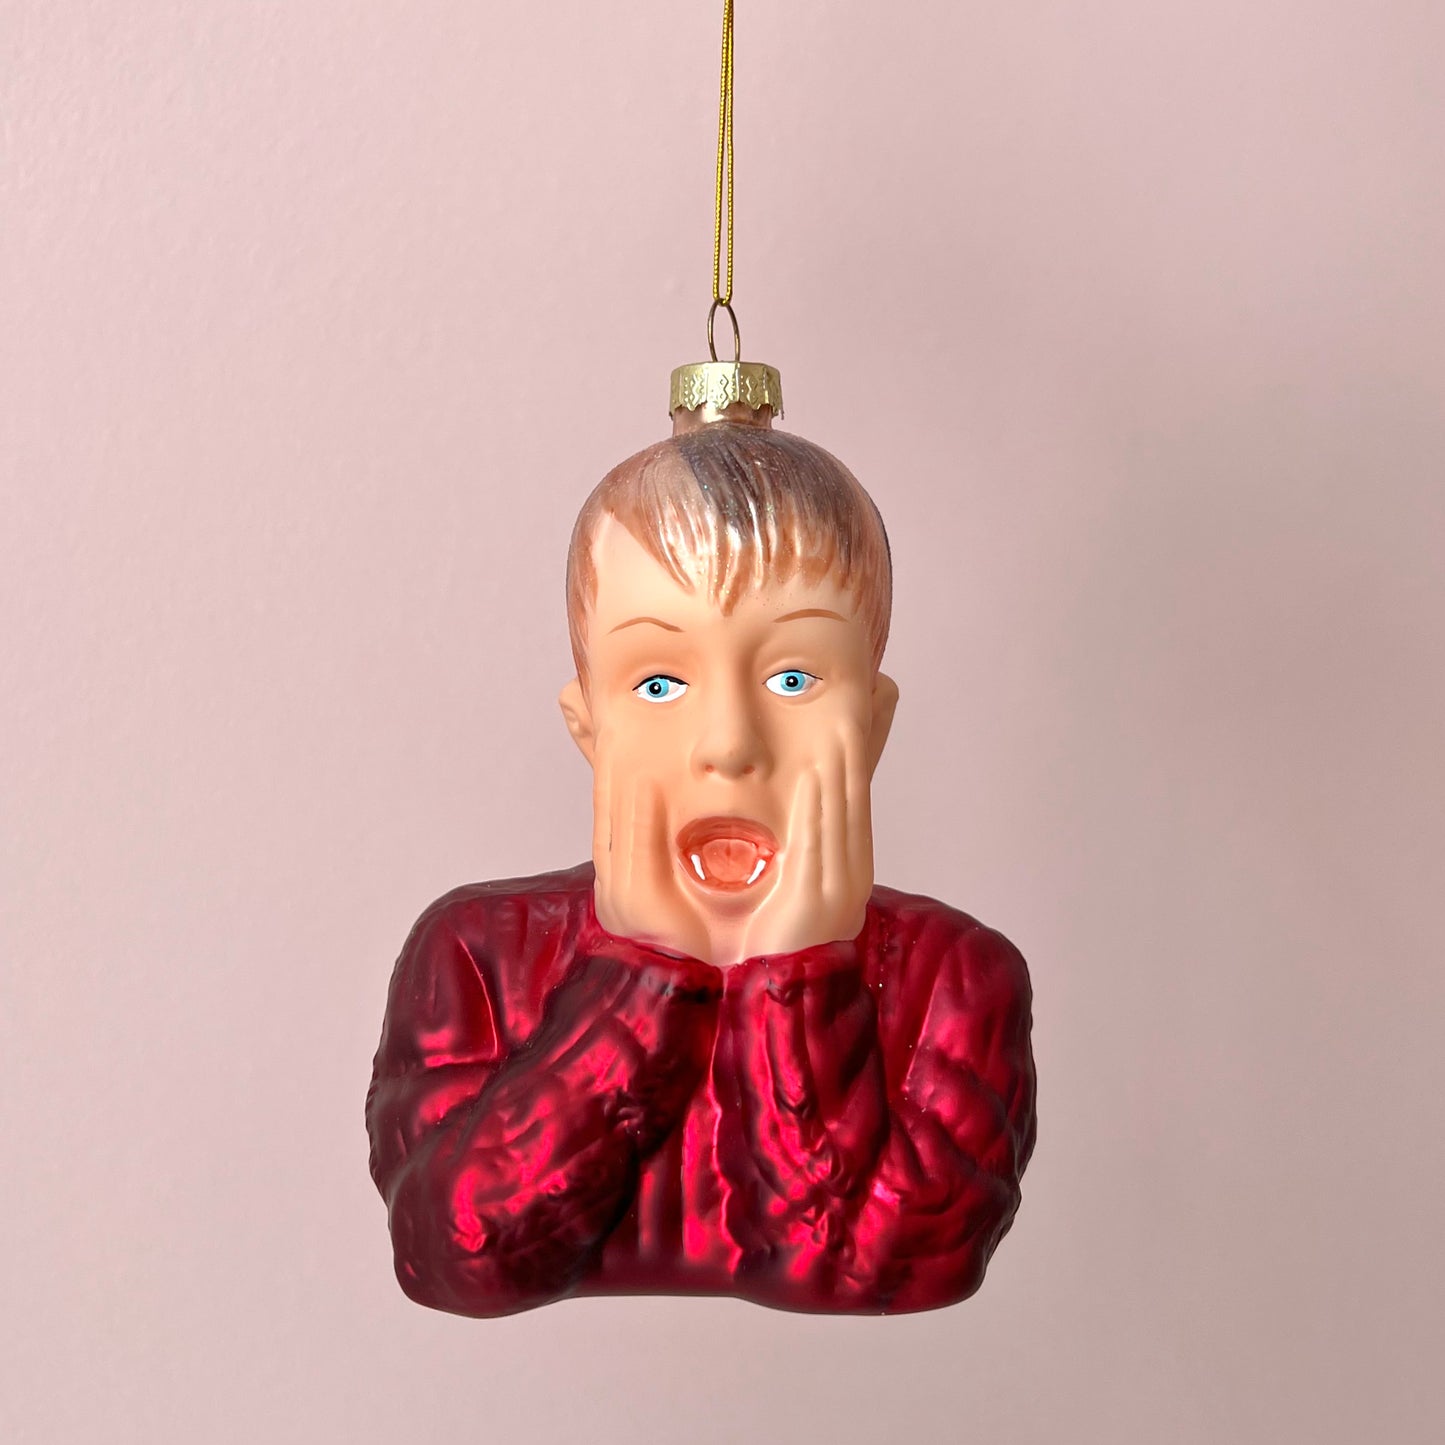 Kevin McCallister Home Alone Ornament